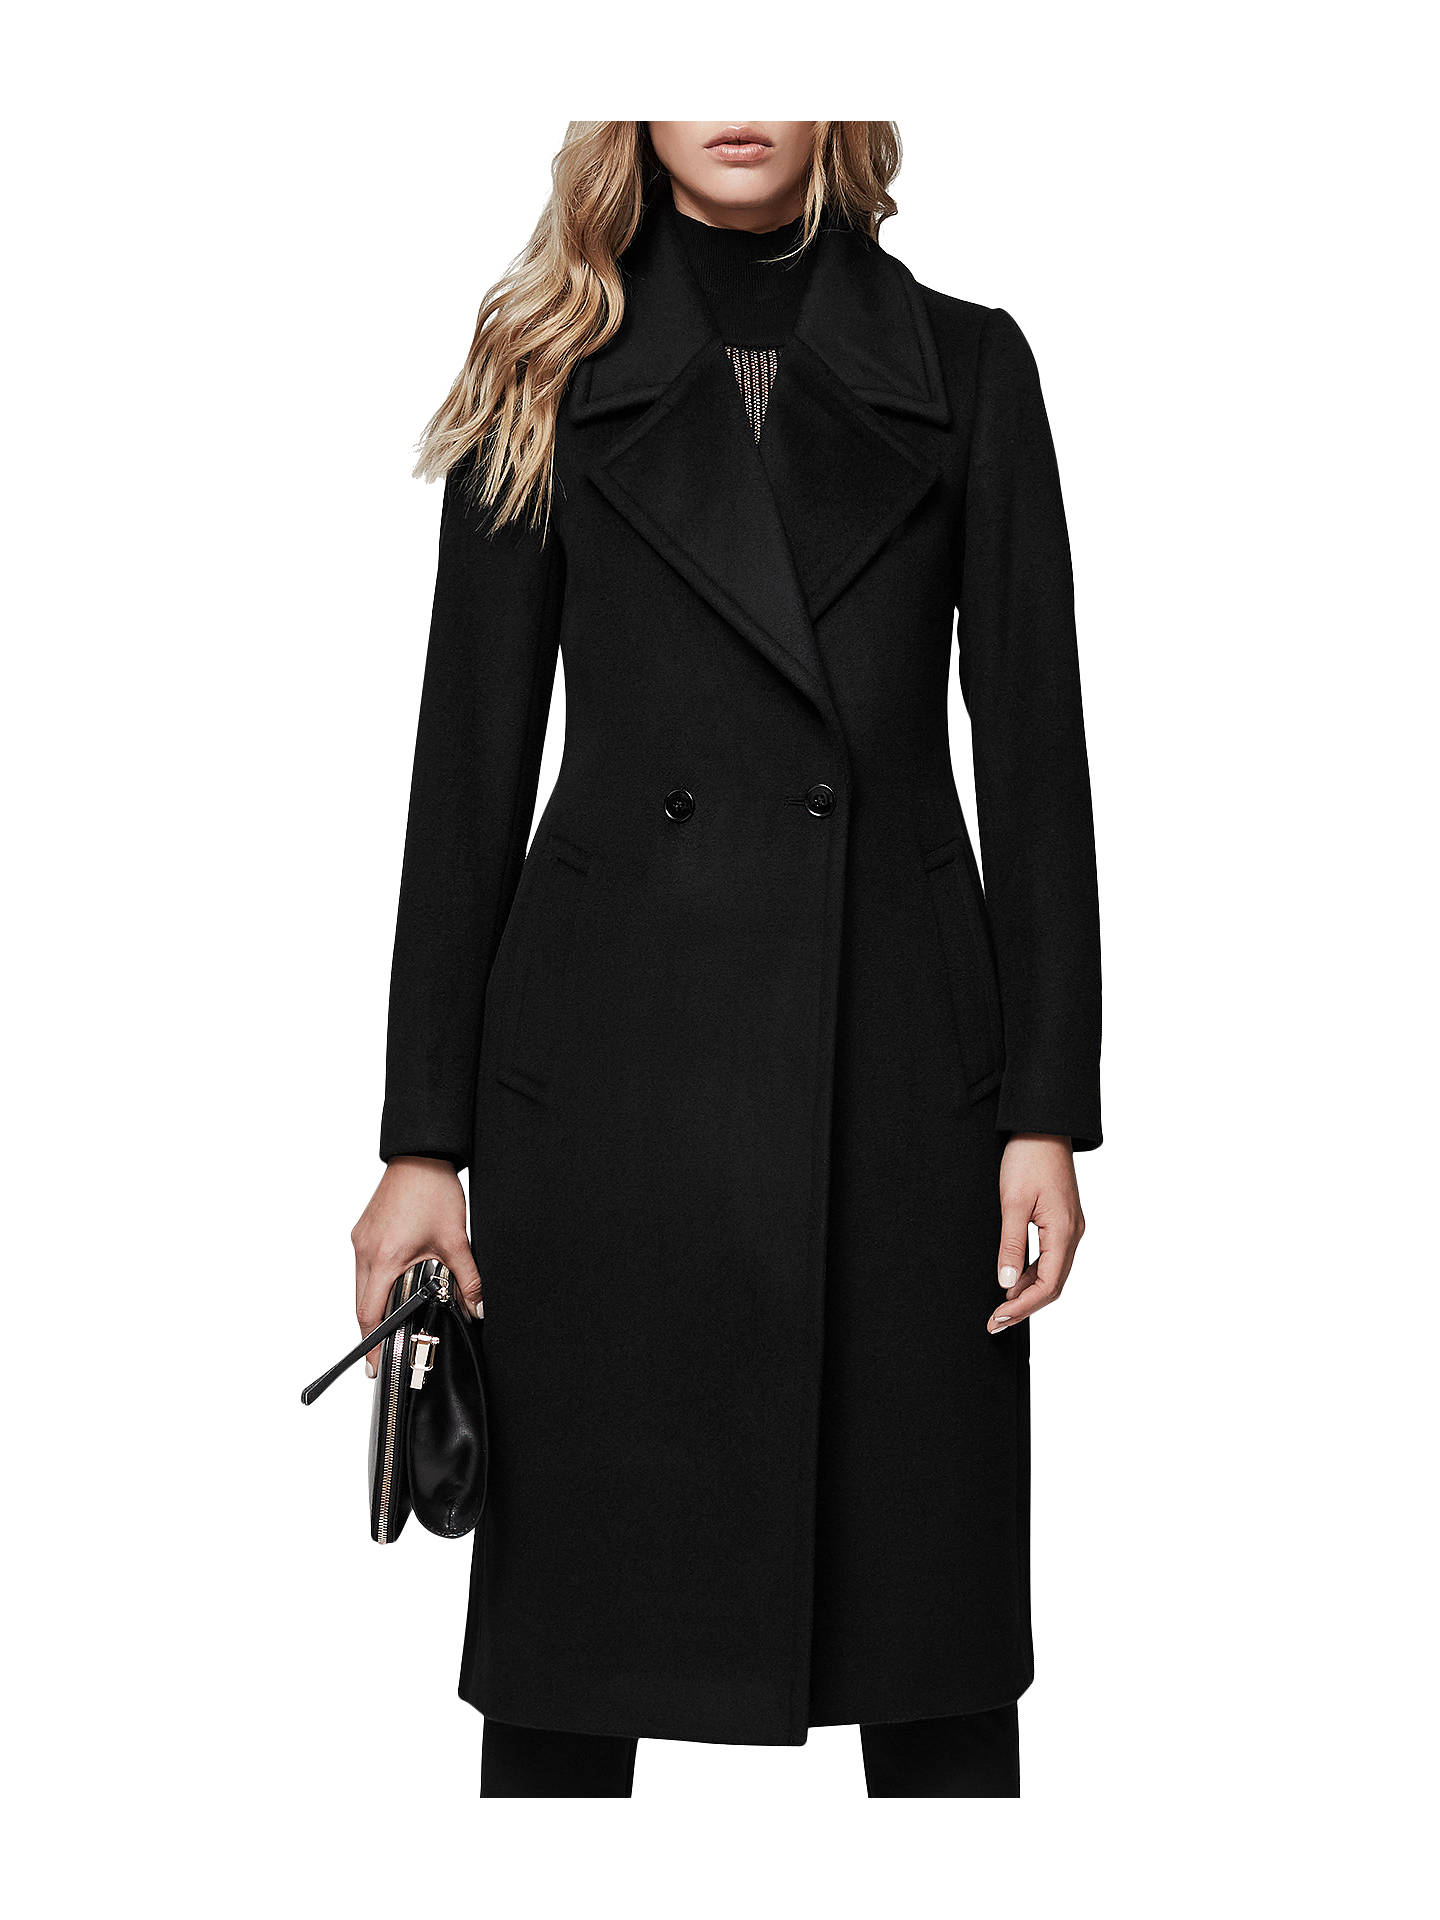 Reiss Lawson Faux Fur Collared Coat, Black at John Lewis & Partners